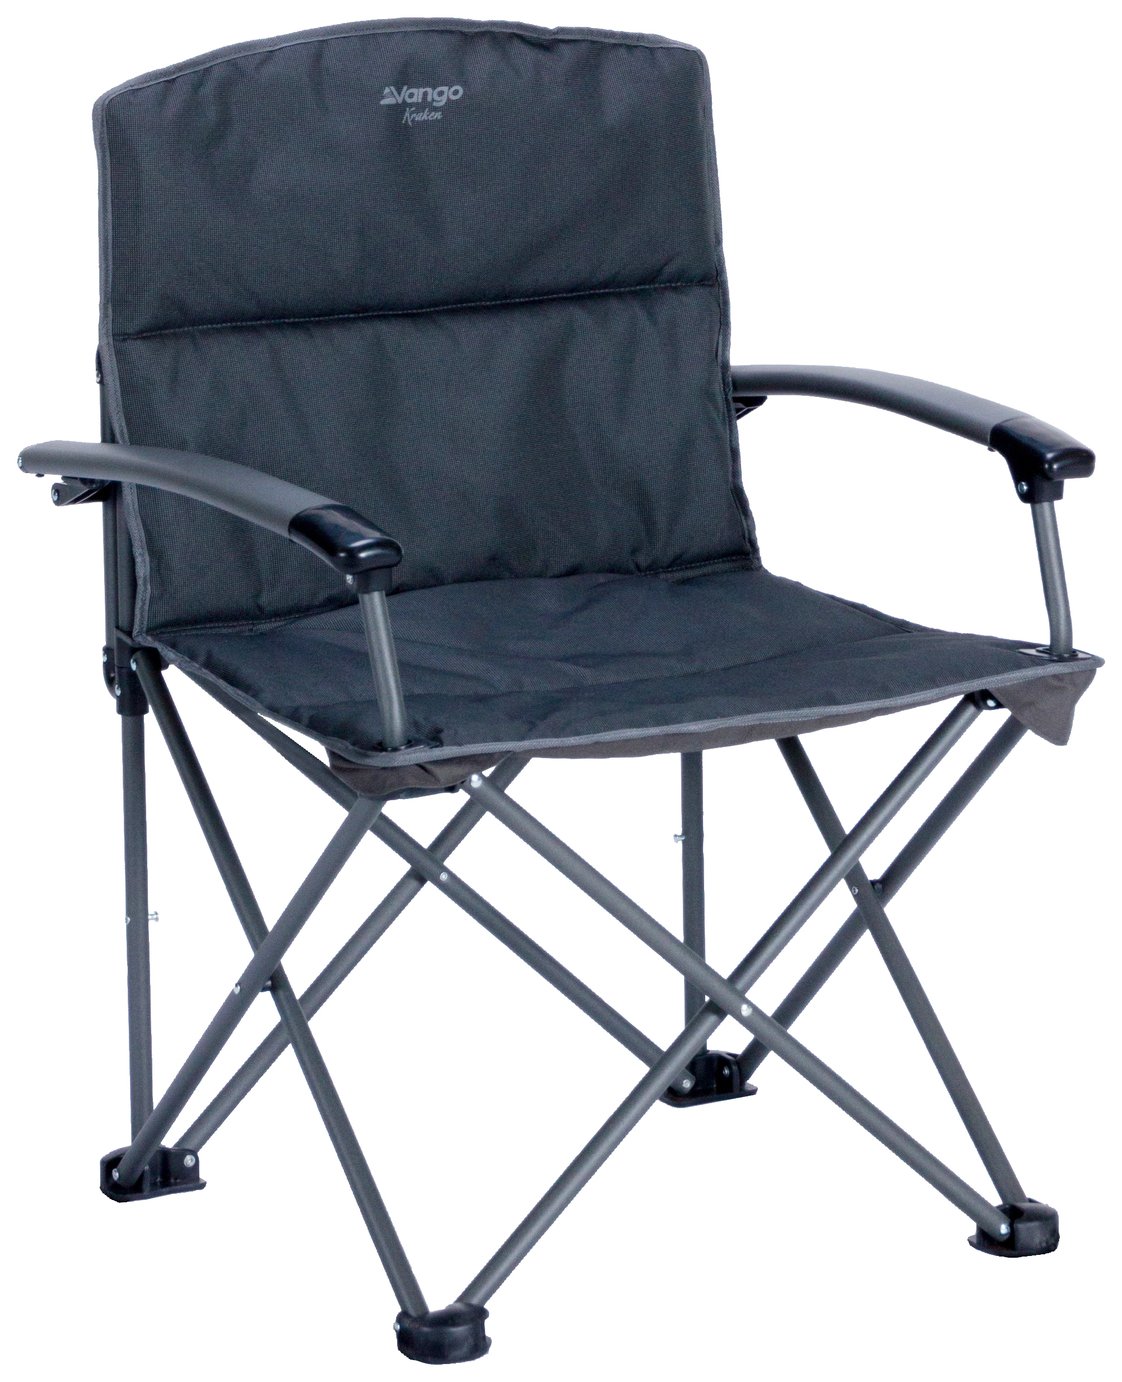 big boy camping chair asda